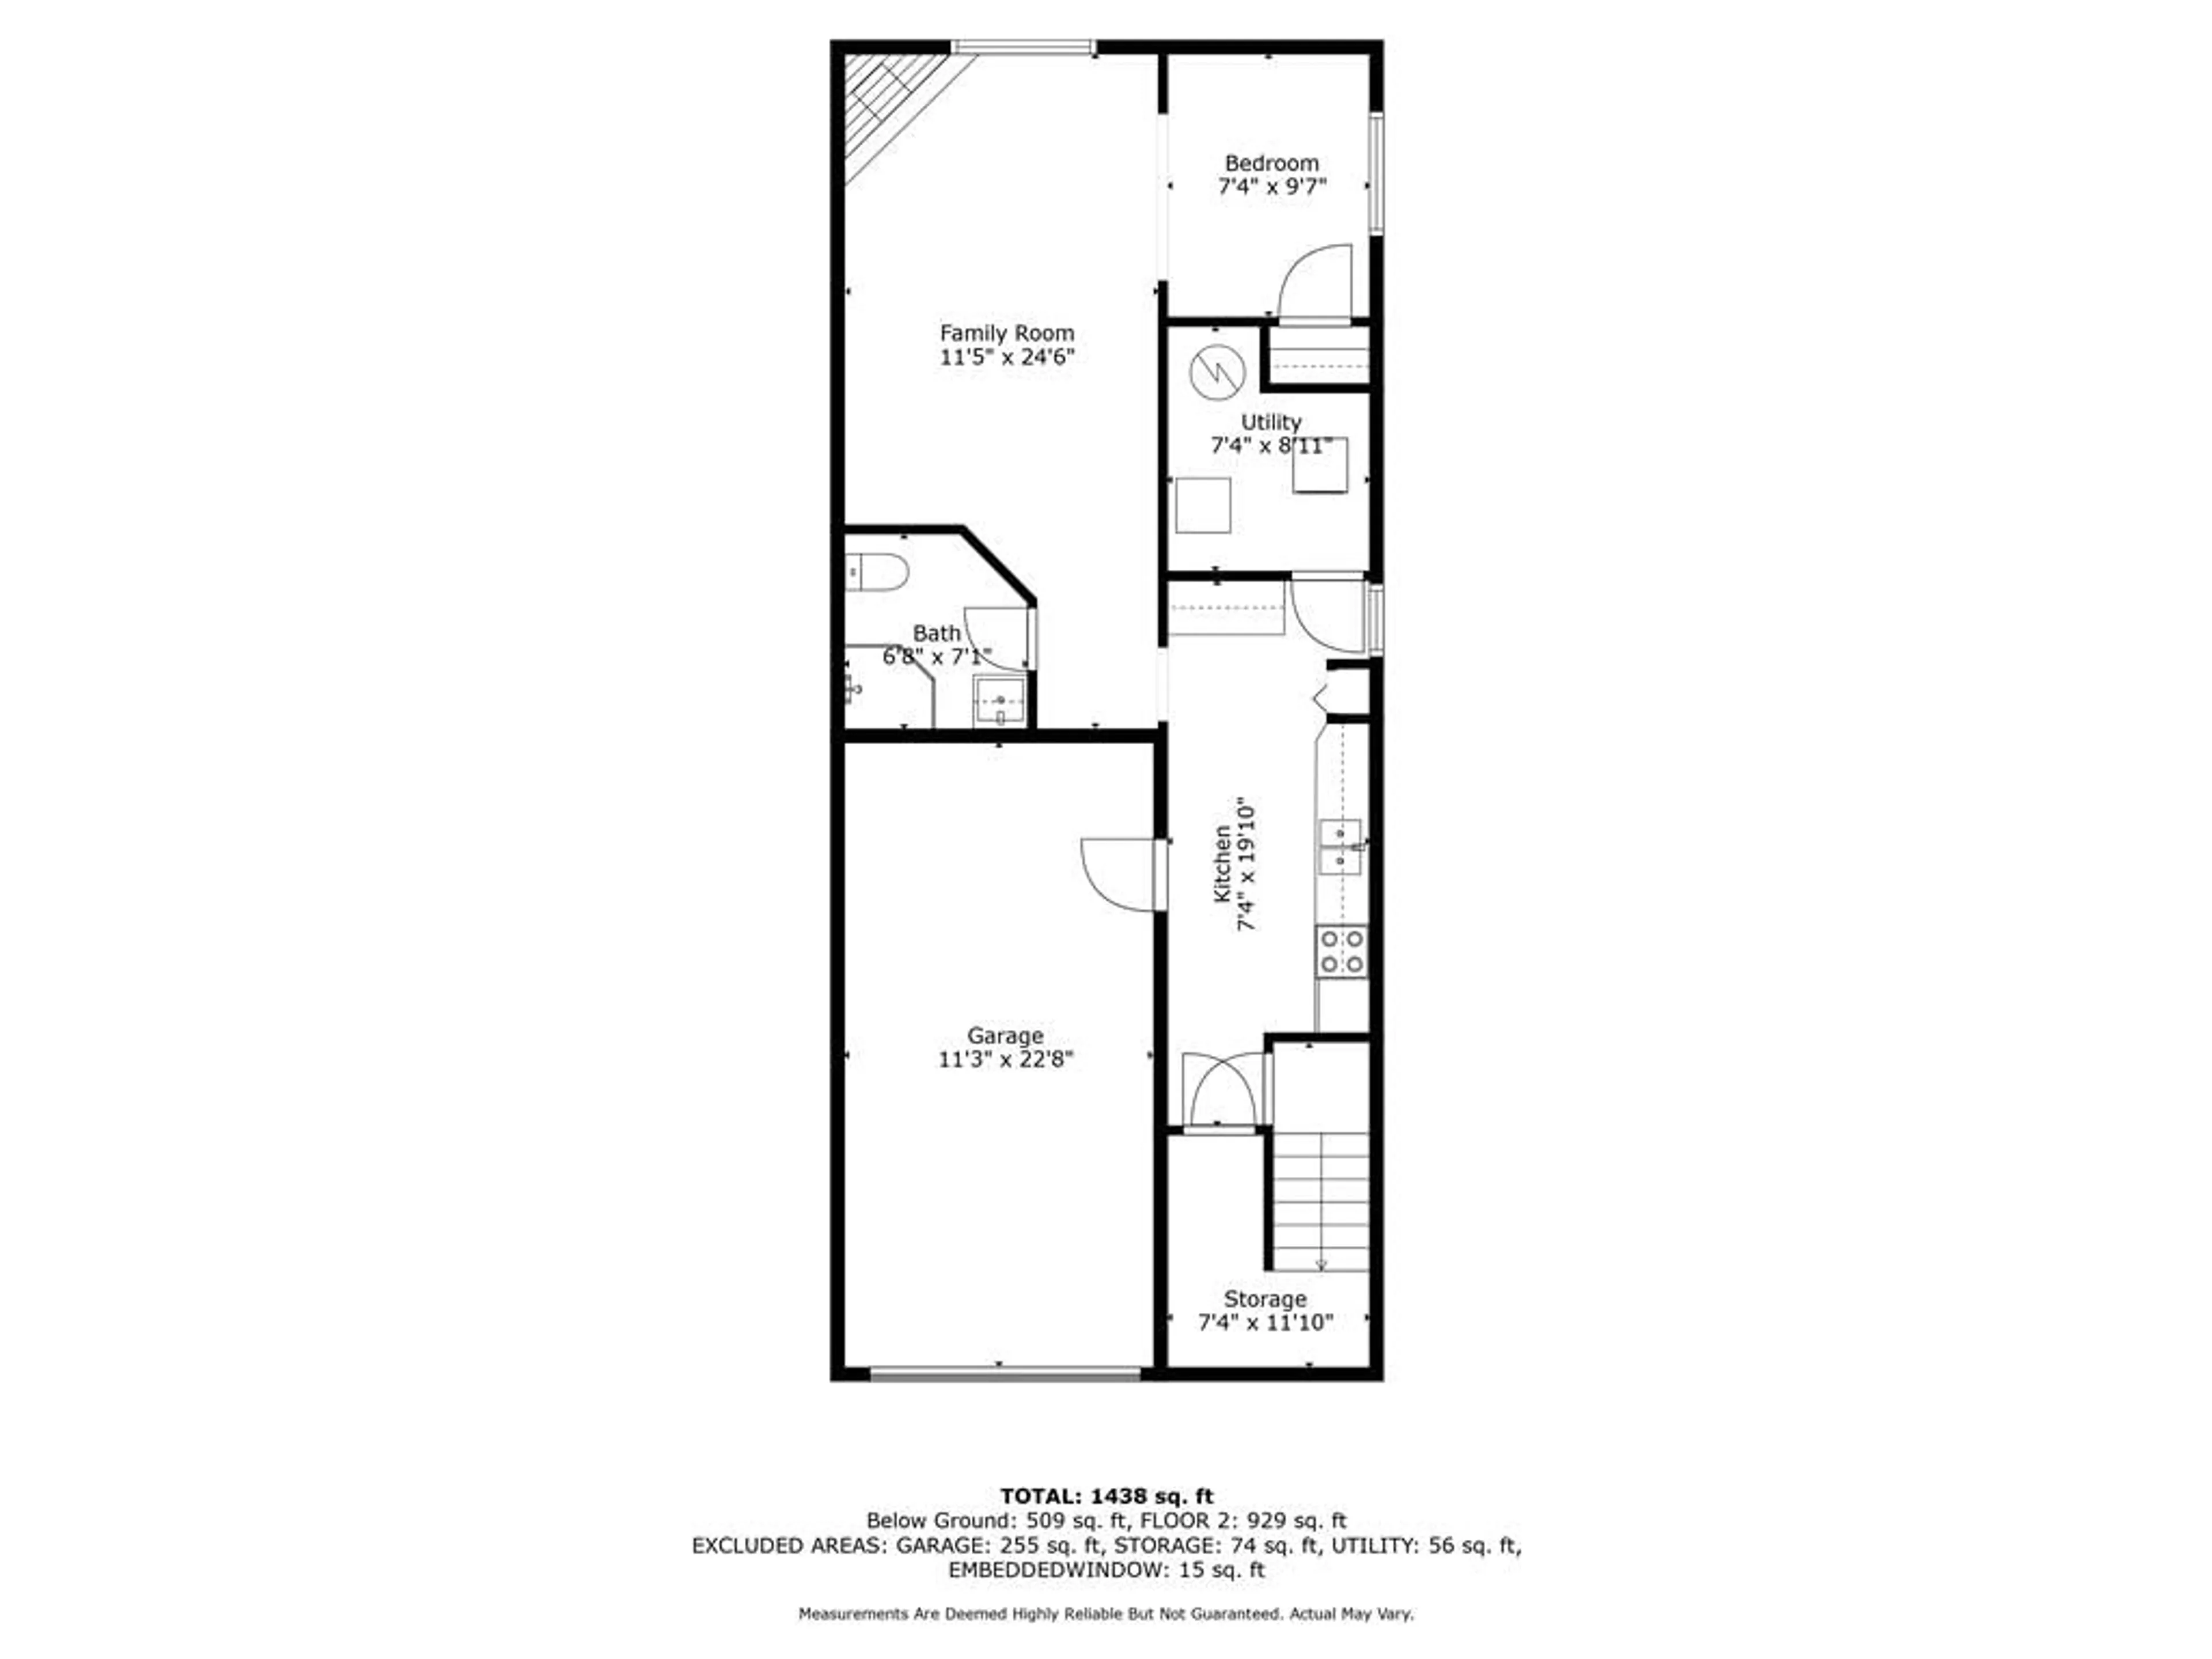 Floor plan for 10 SKYLARK Rd, Brantford Ontario N3R 6W2